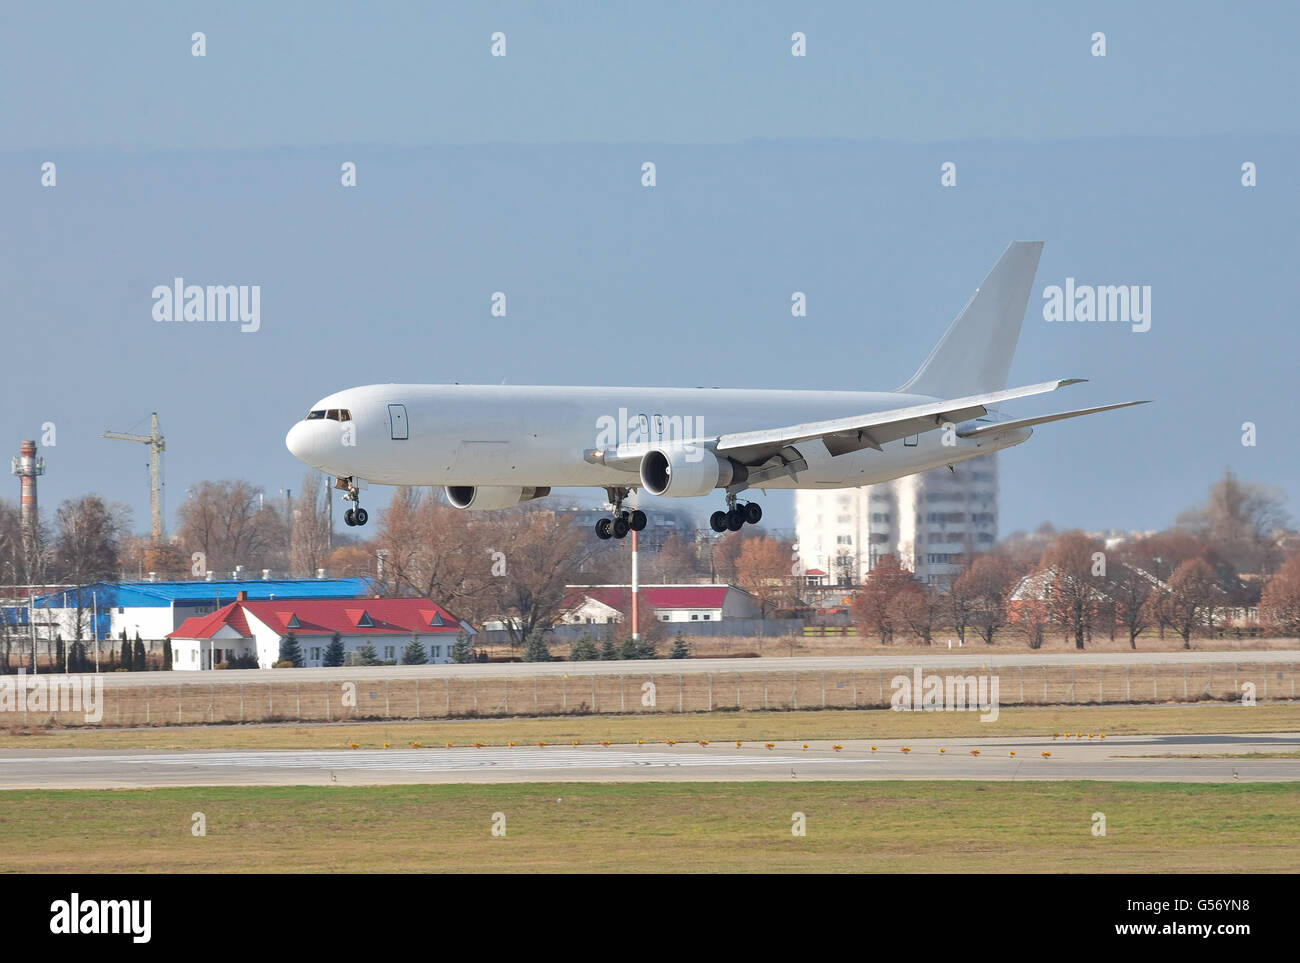 Cargo plane landing on the airport runway Stock Photo